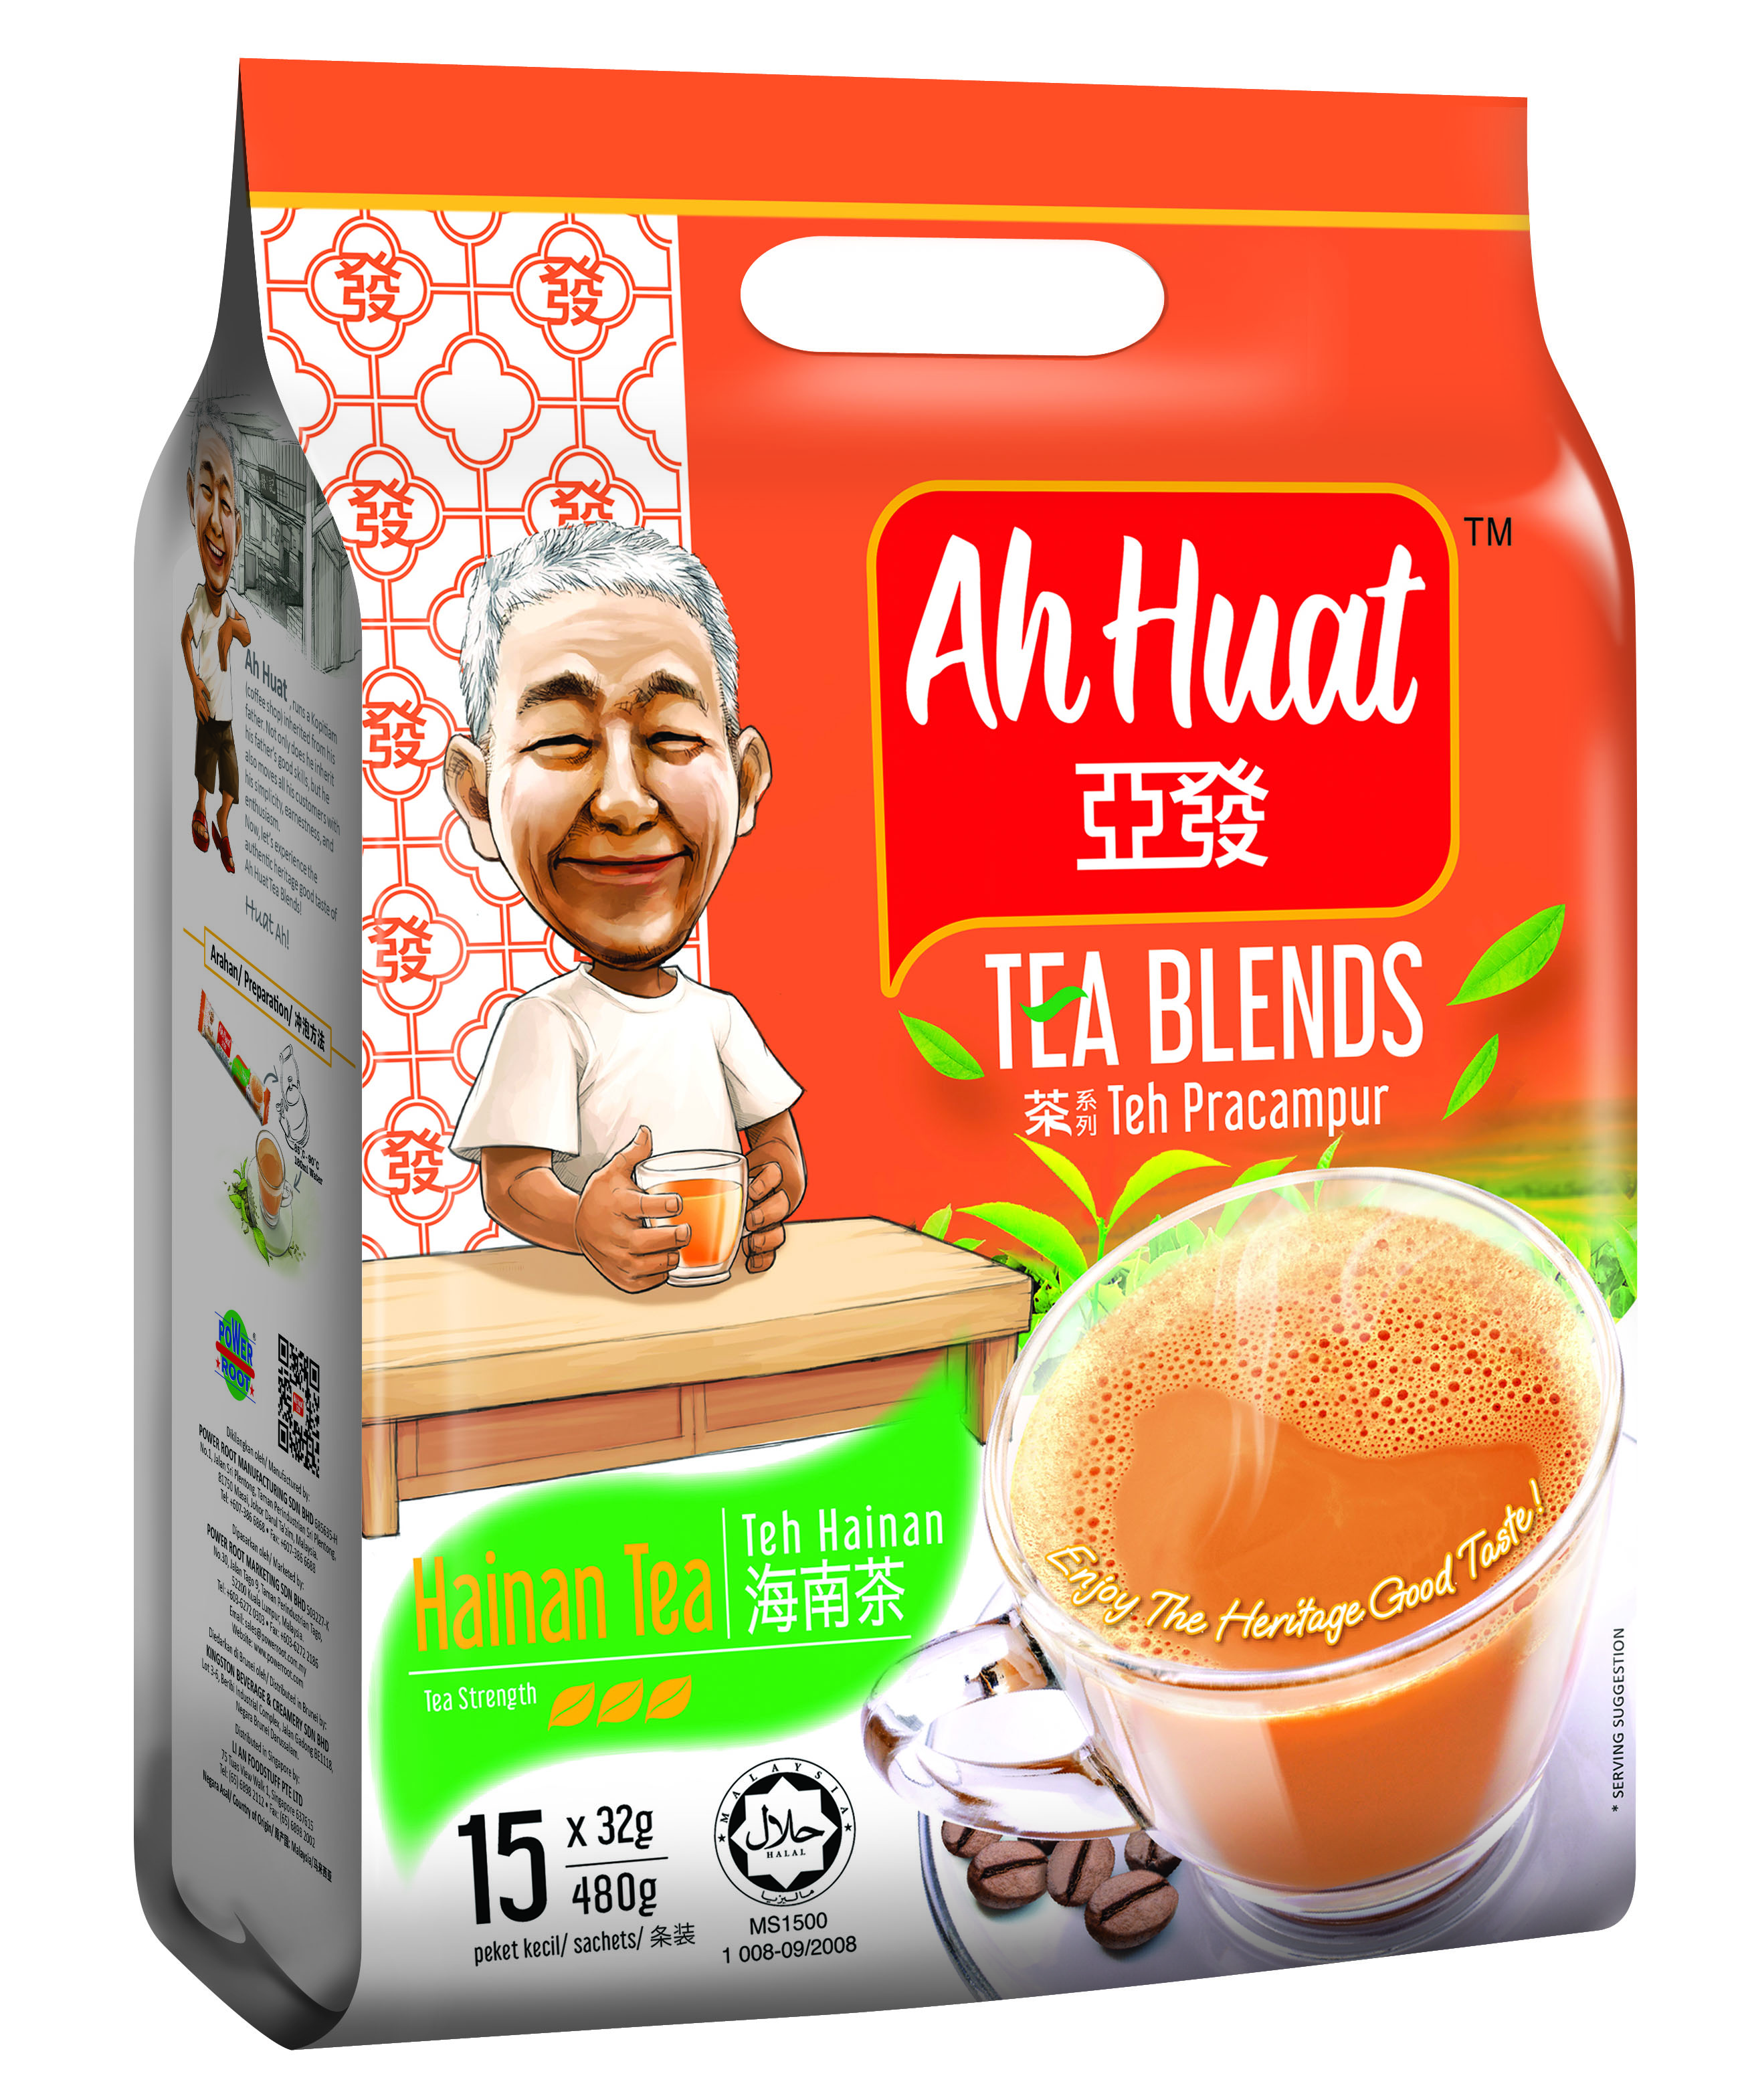 Ah-Huat-White-Coffee